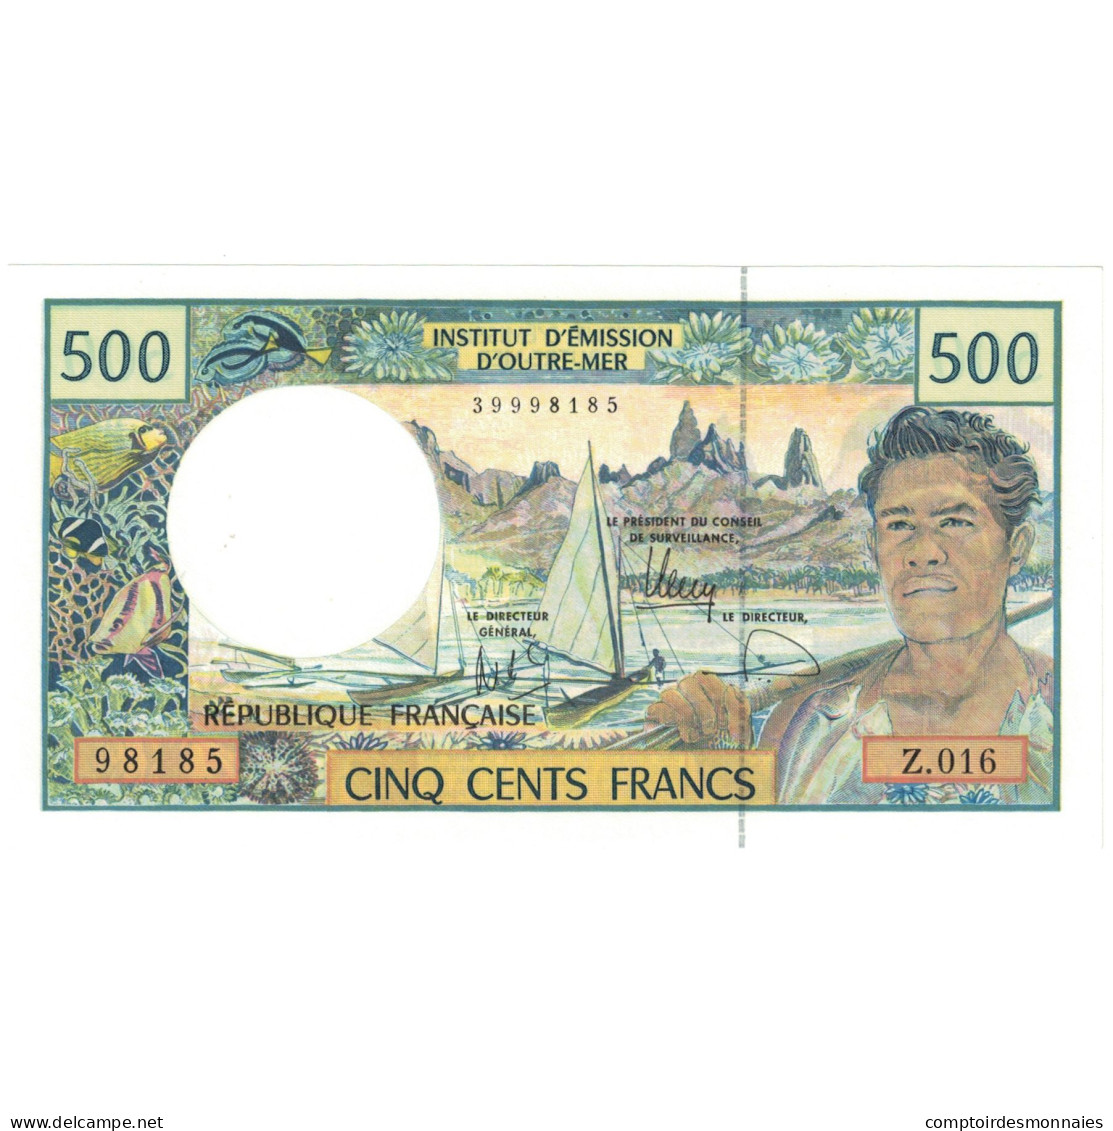 Billet, Tahiti, 500 Francs, 1985, KM:25d, NEUF - Papeete (French Polynesia 1914-1985)